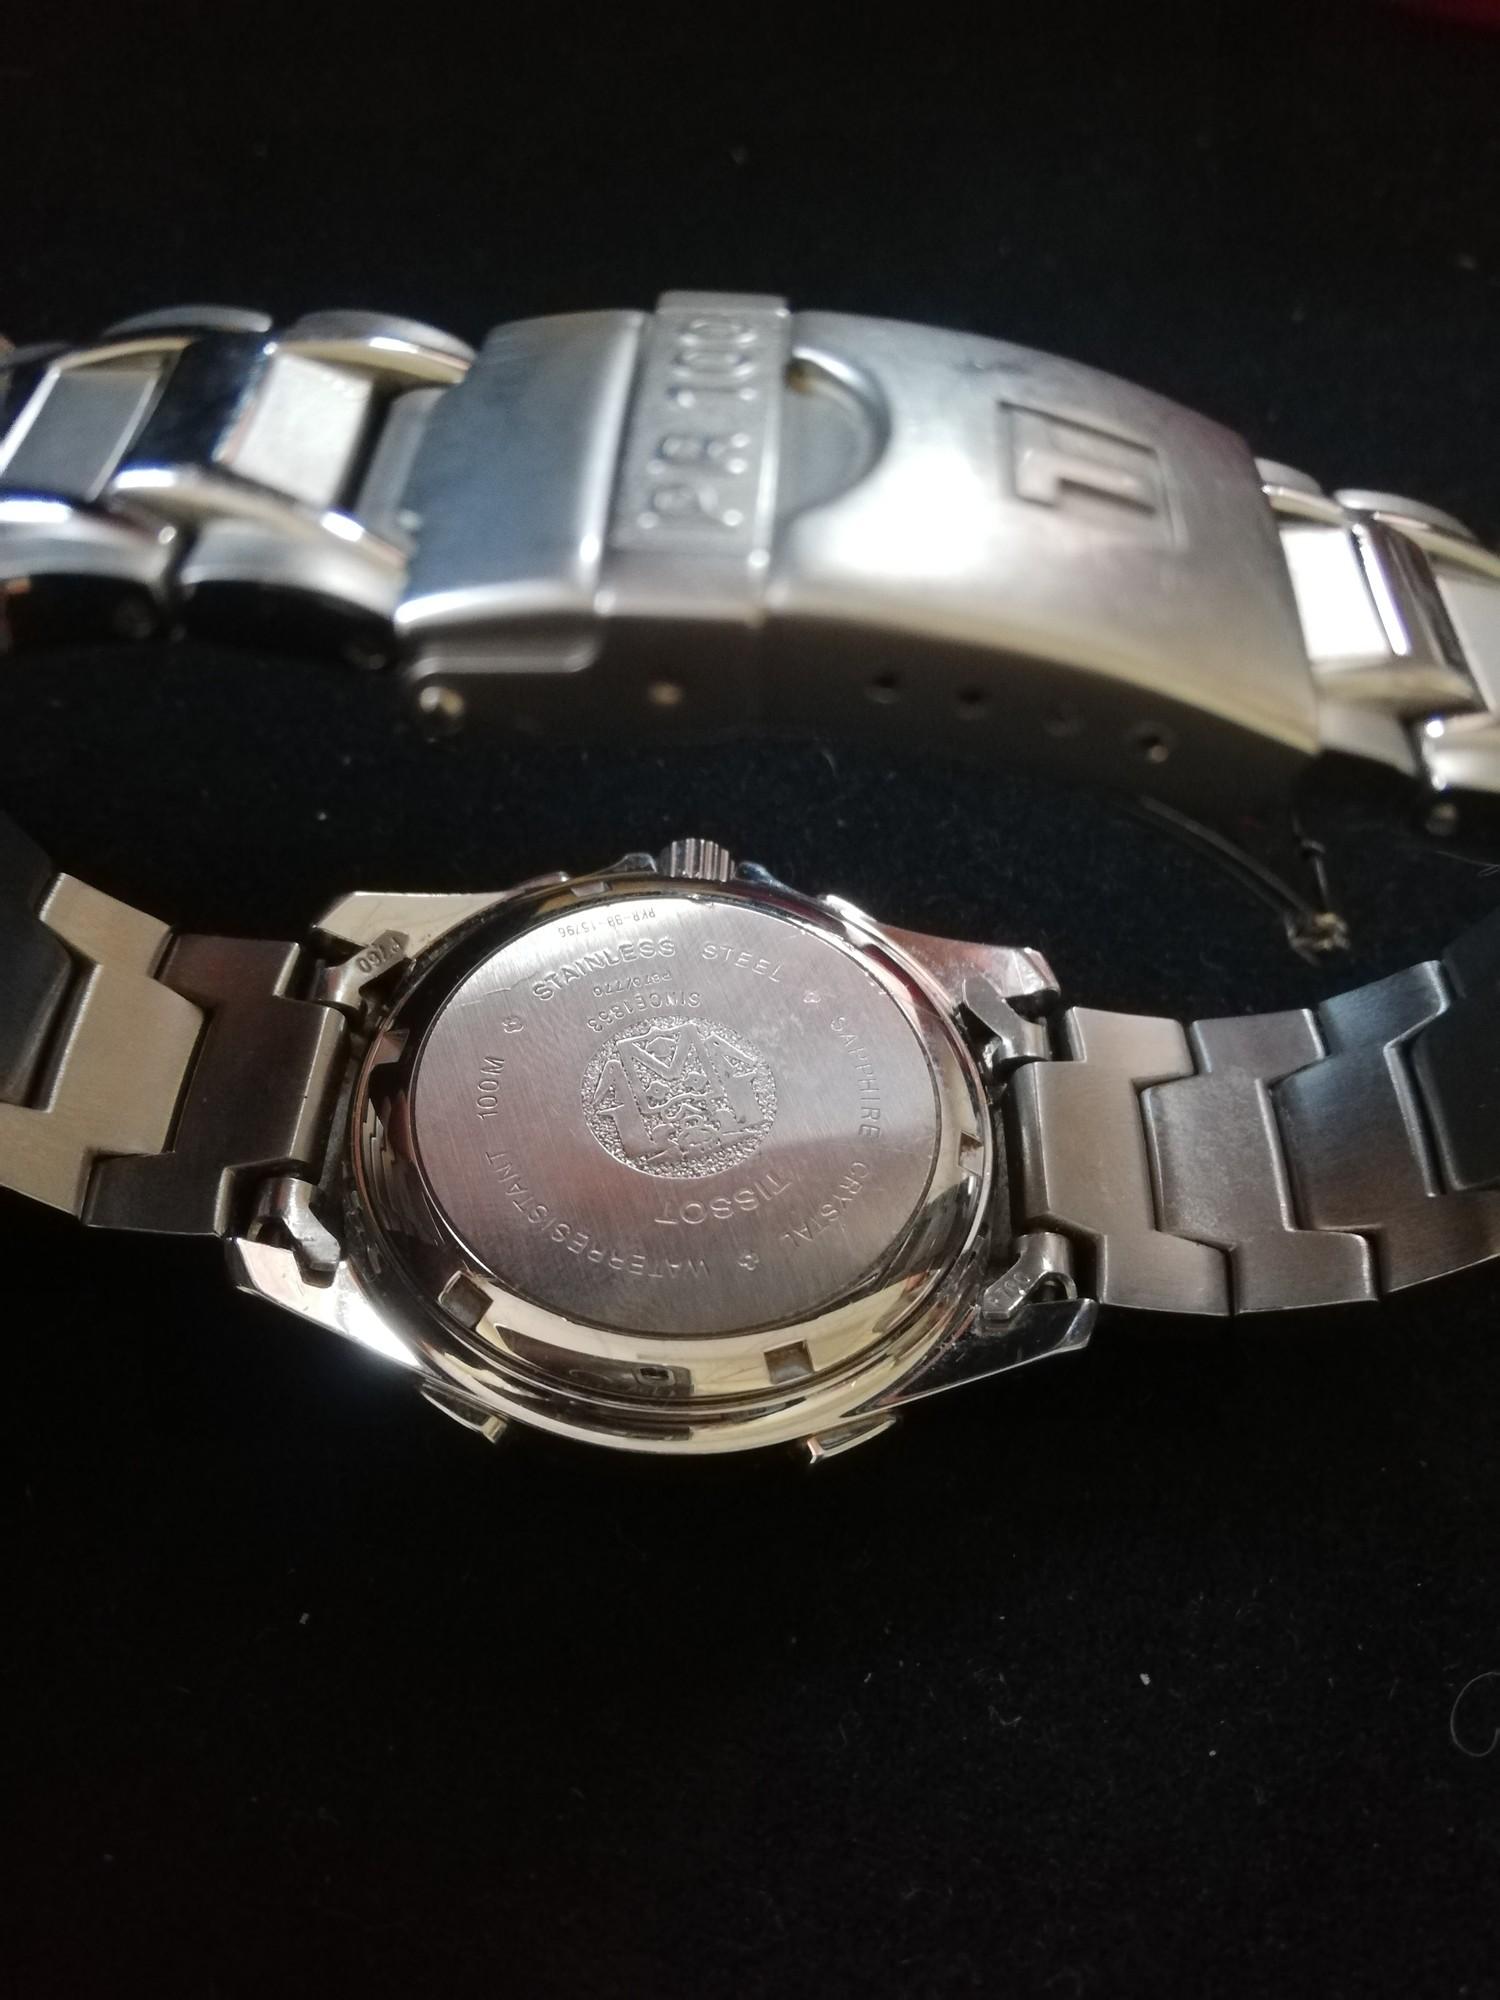 Tissot gents stainless steel PR100 chrono alarm wristwatch -in running order - Image 3 of 3